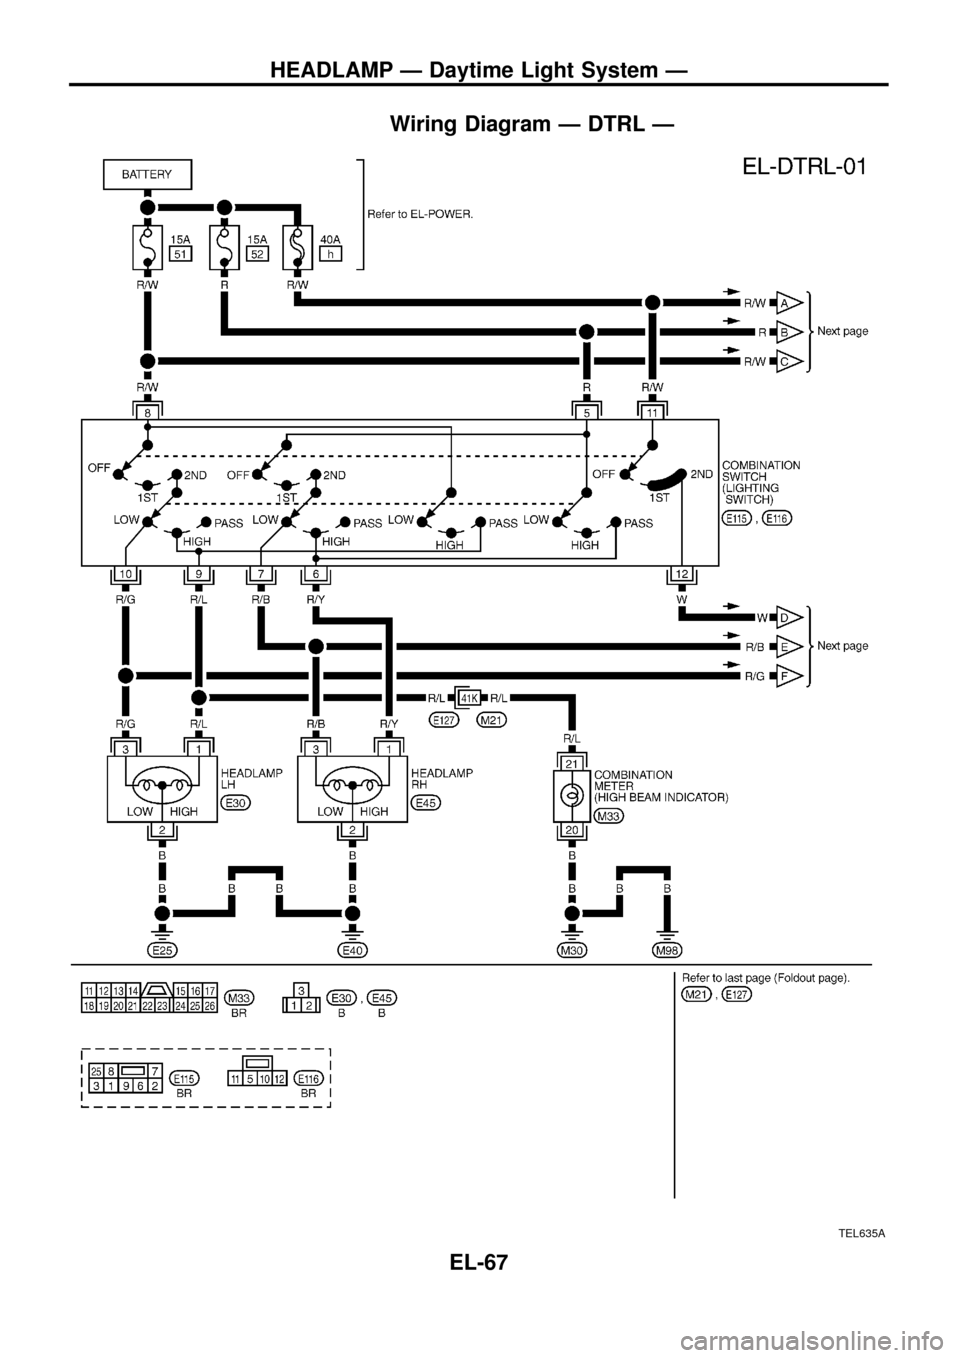 NISSAN PATROL 1998 Y61 / 5.G Electrical System Manual PDF Wiring Diagram Ð DTRL Ð
TEL635A
HEADLAMP Ð Daytime Light System Ð
EL-67 